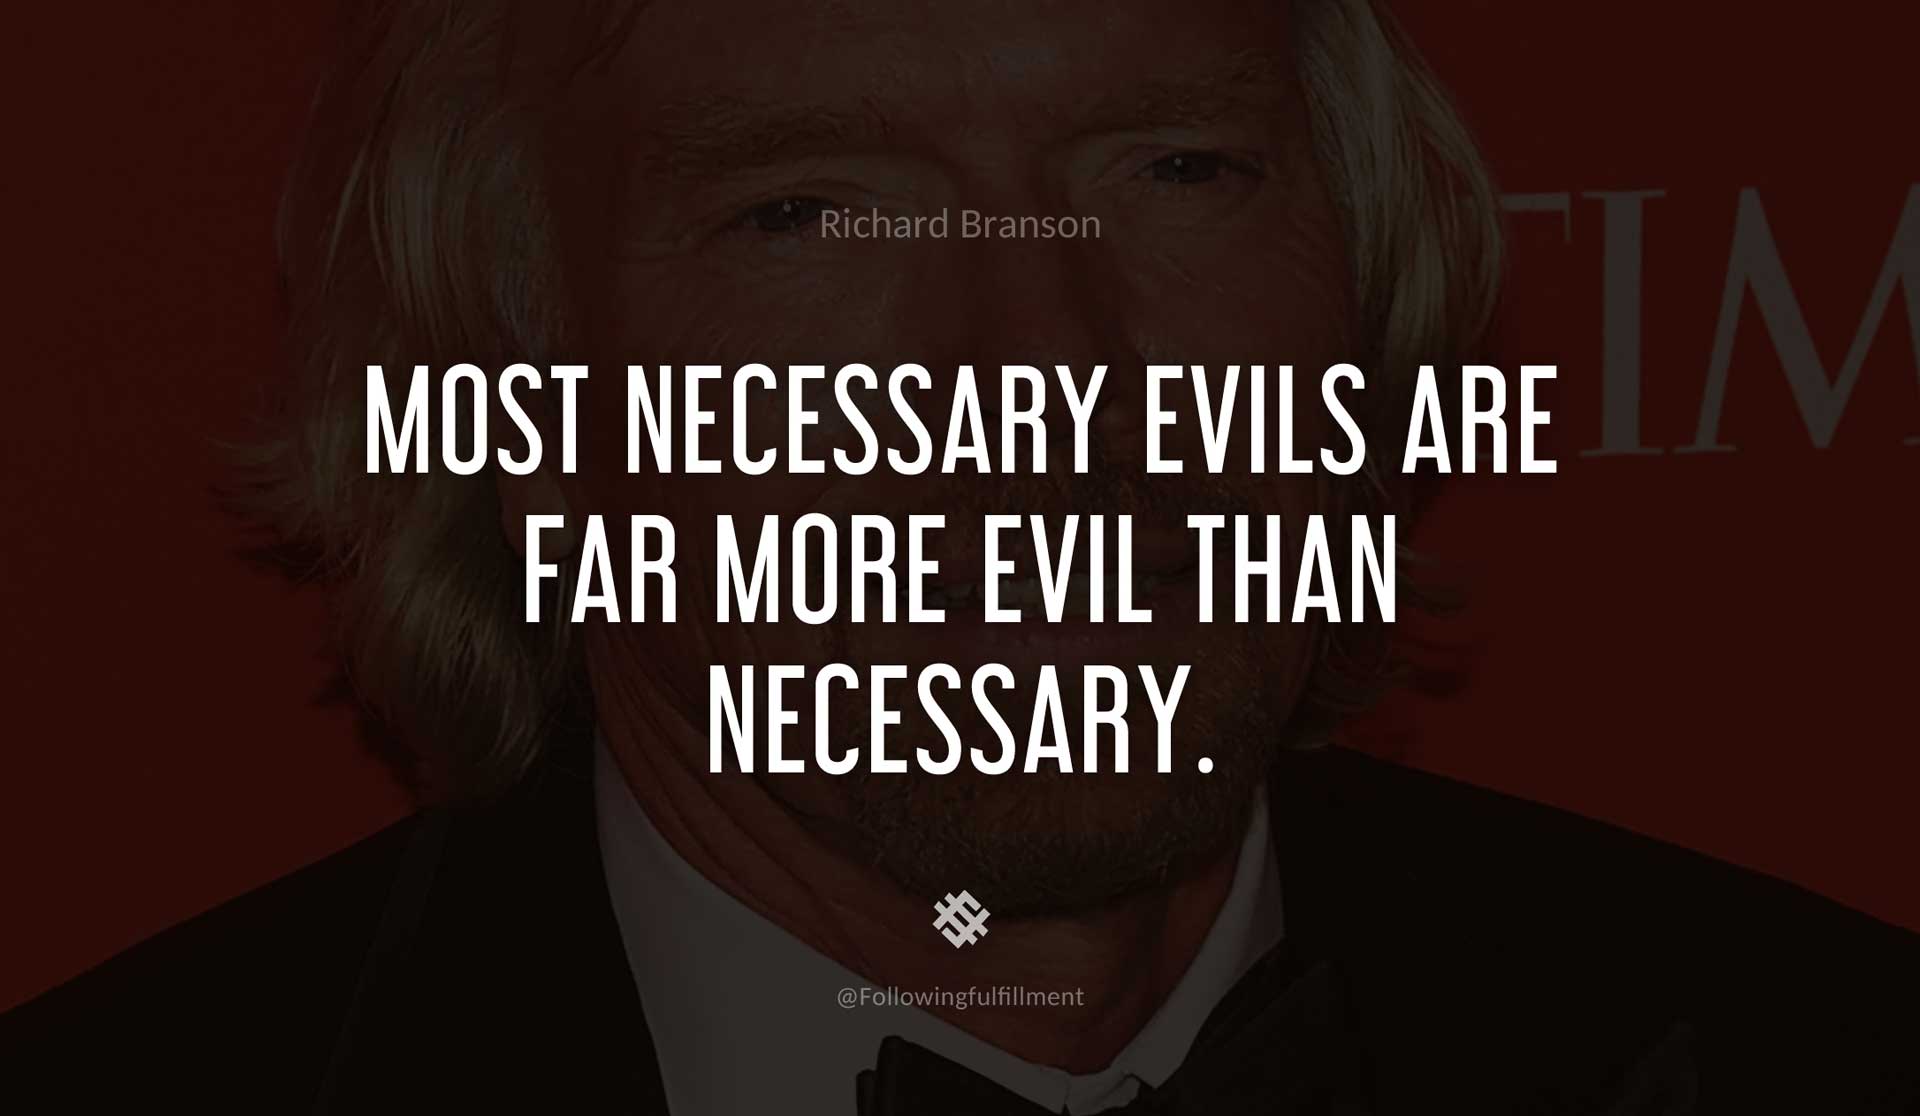 Most-necessary-evils-are-far-more-evil-than-necessary.-RICHARD-BRANSON-Quote.jpg